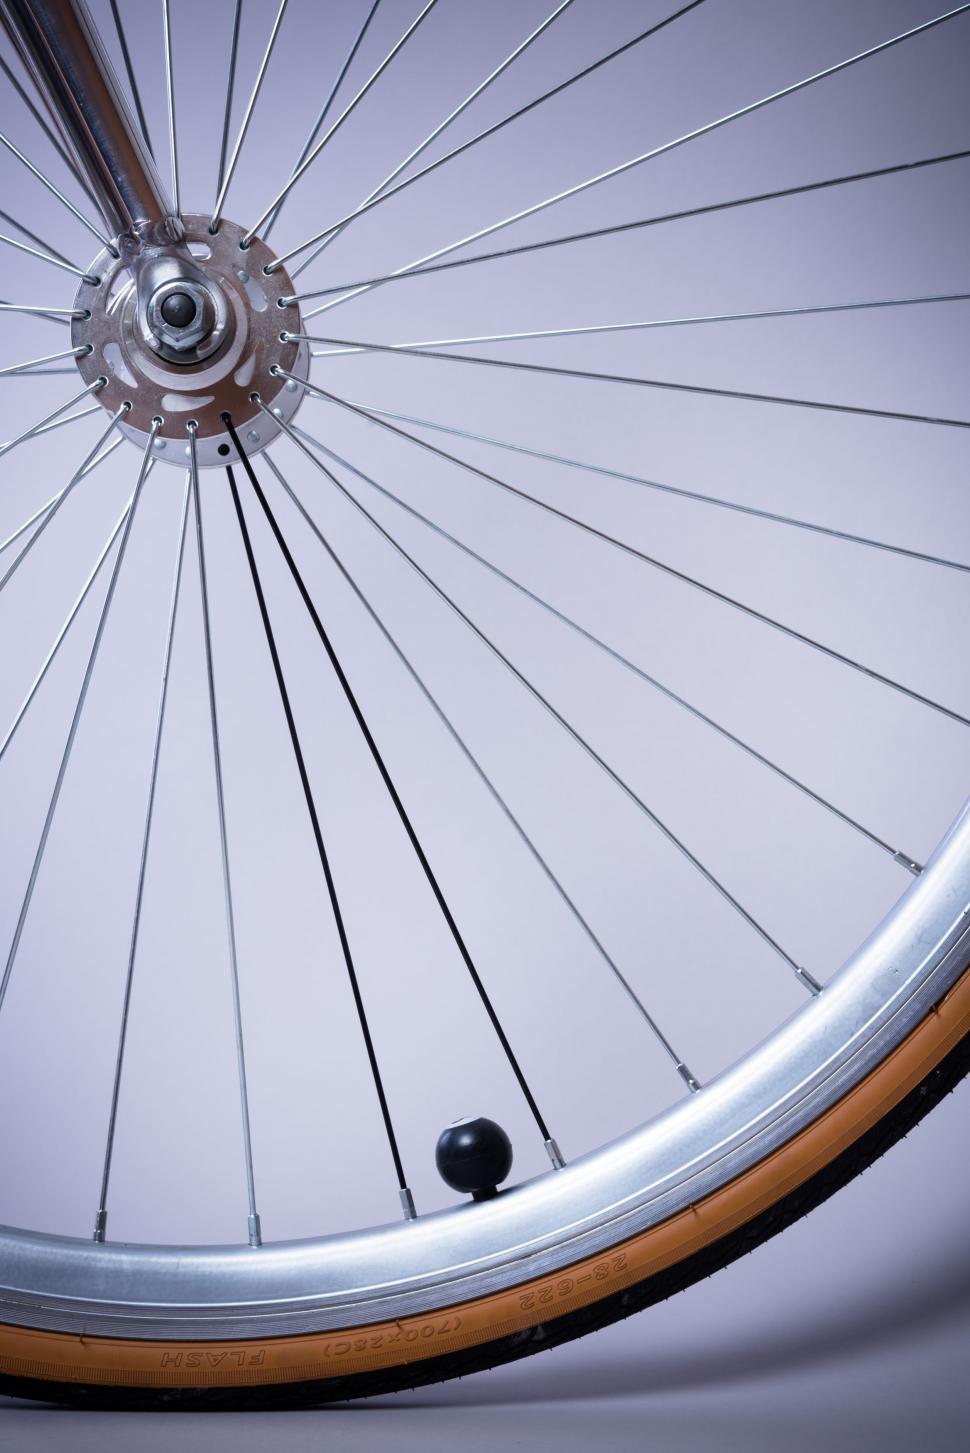 Free Image of Spoke wheel 